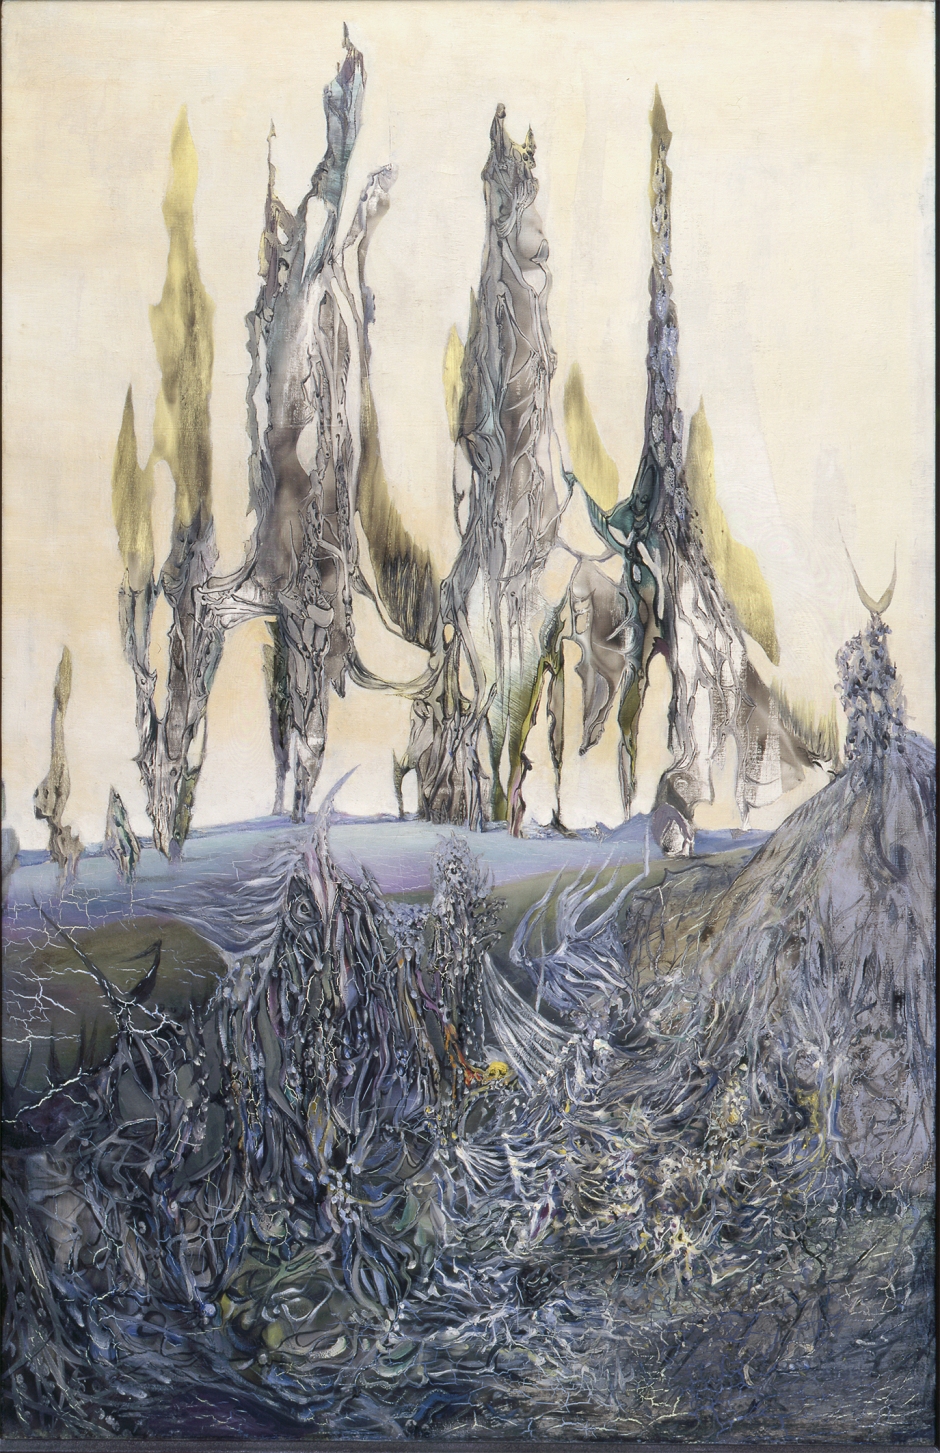 Wolfgan Paalen, Les étrangers, 1937